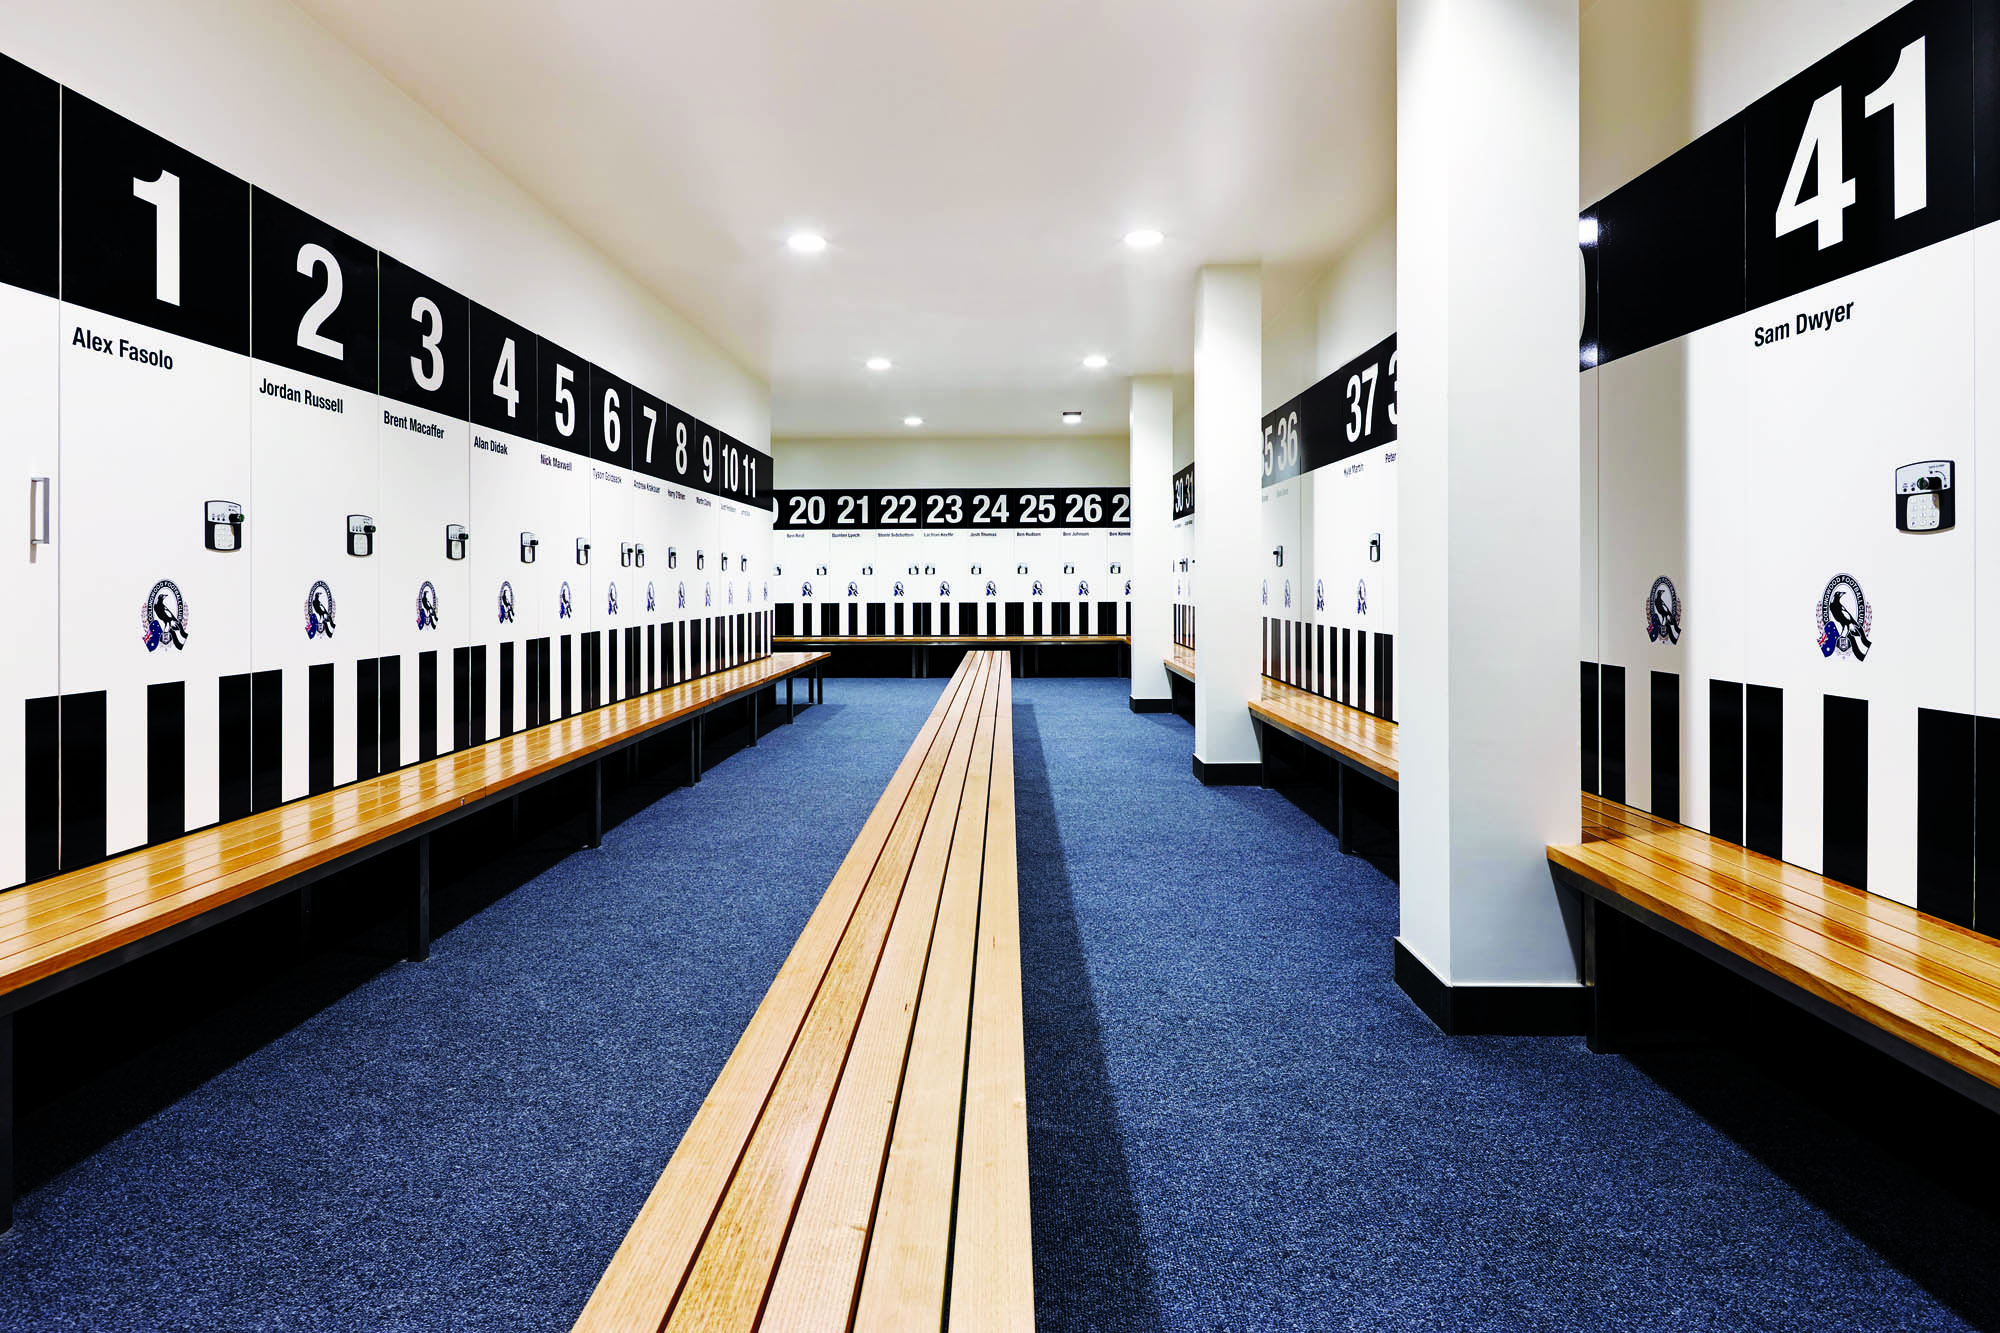 collingwood football club melbourne lockers 